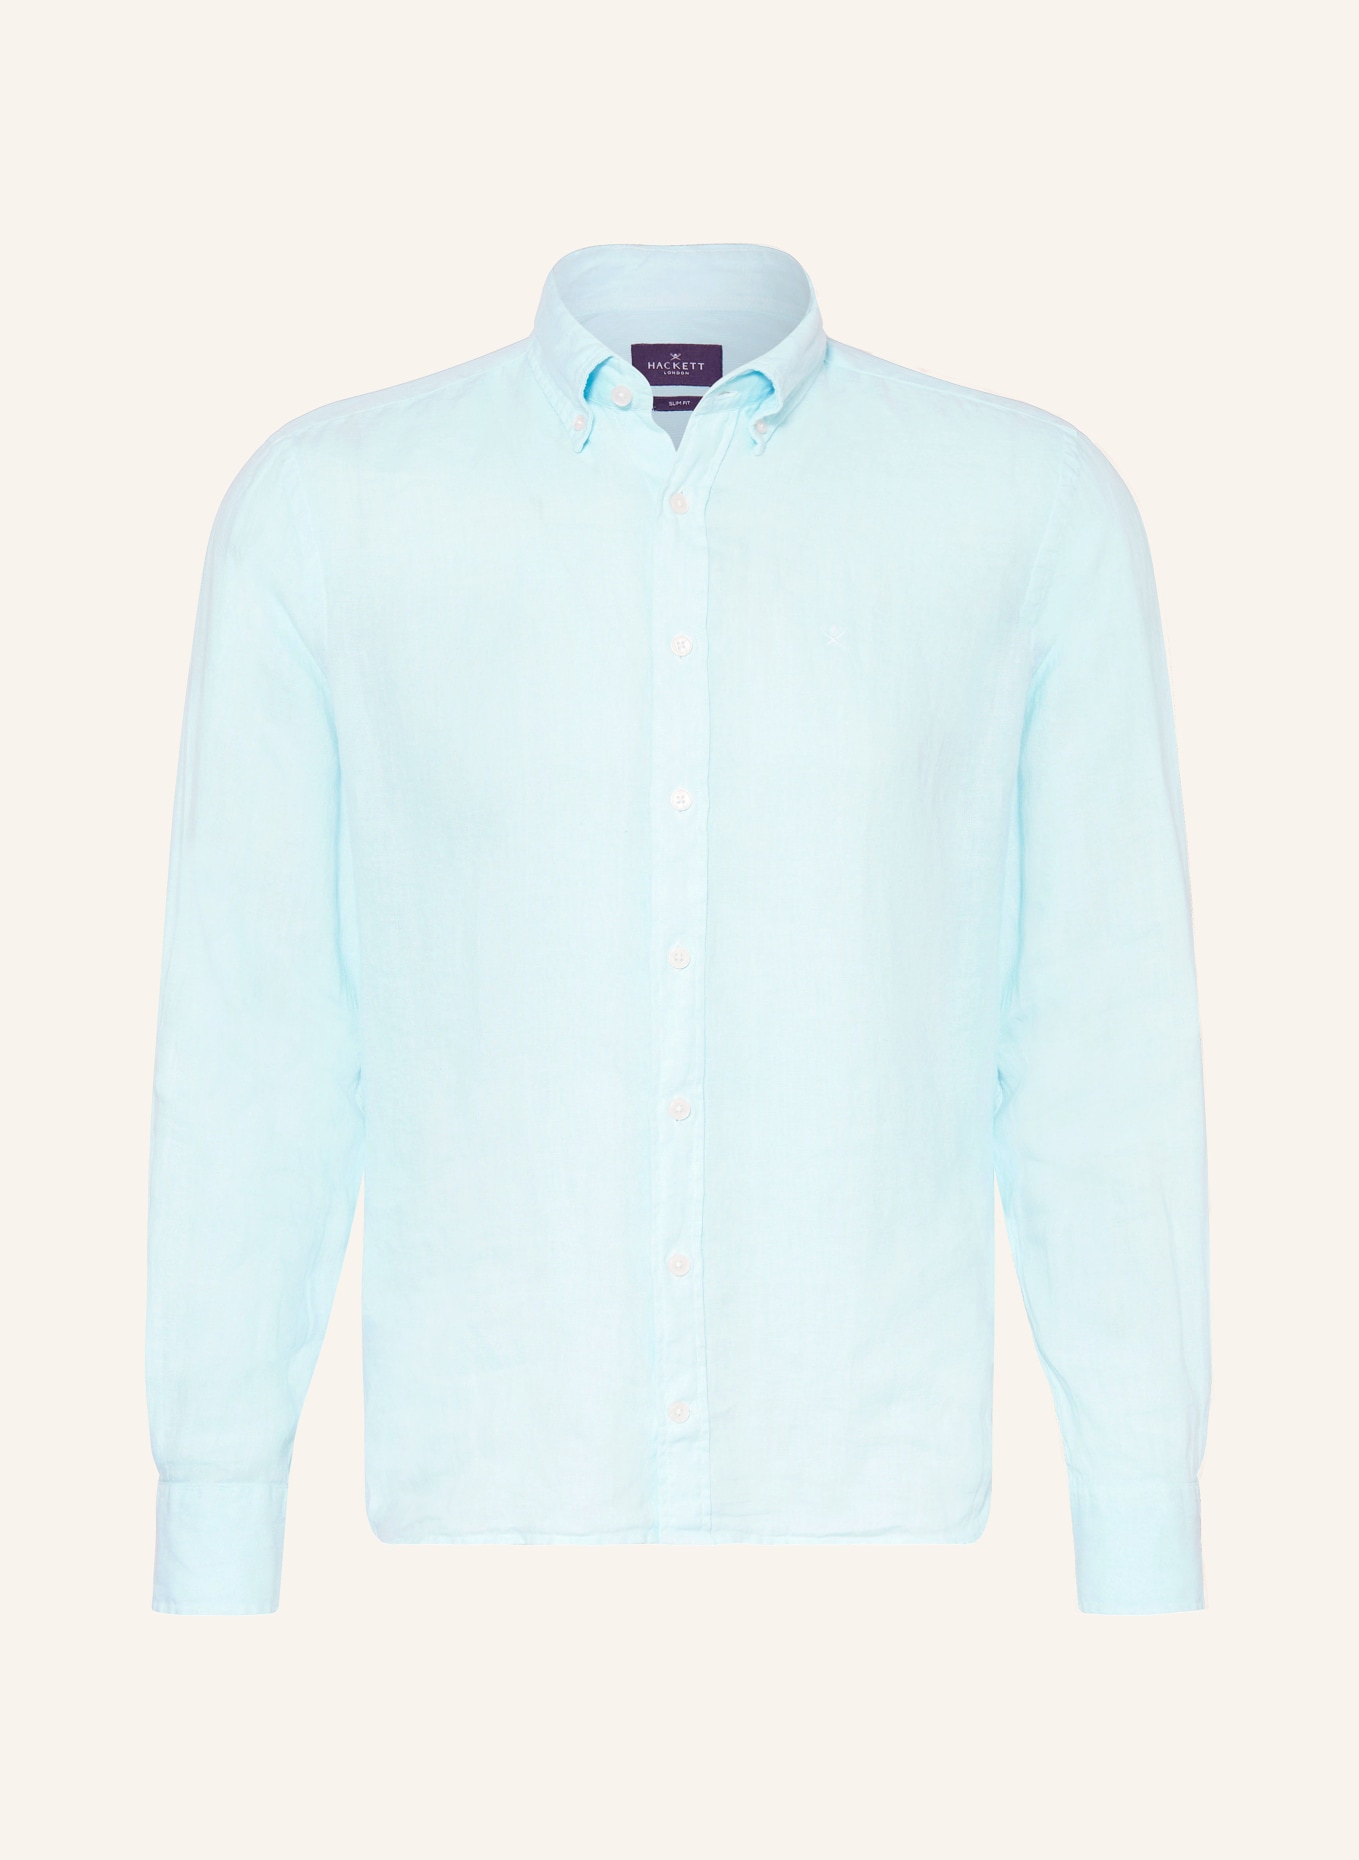 HACKETT LONDON Leinenhemd Slim Fit, Farbe: TÜRKIS (Bild 1)